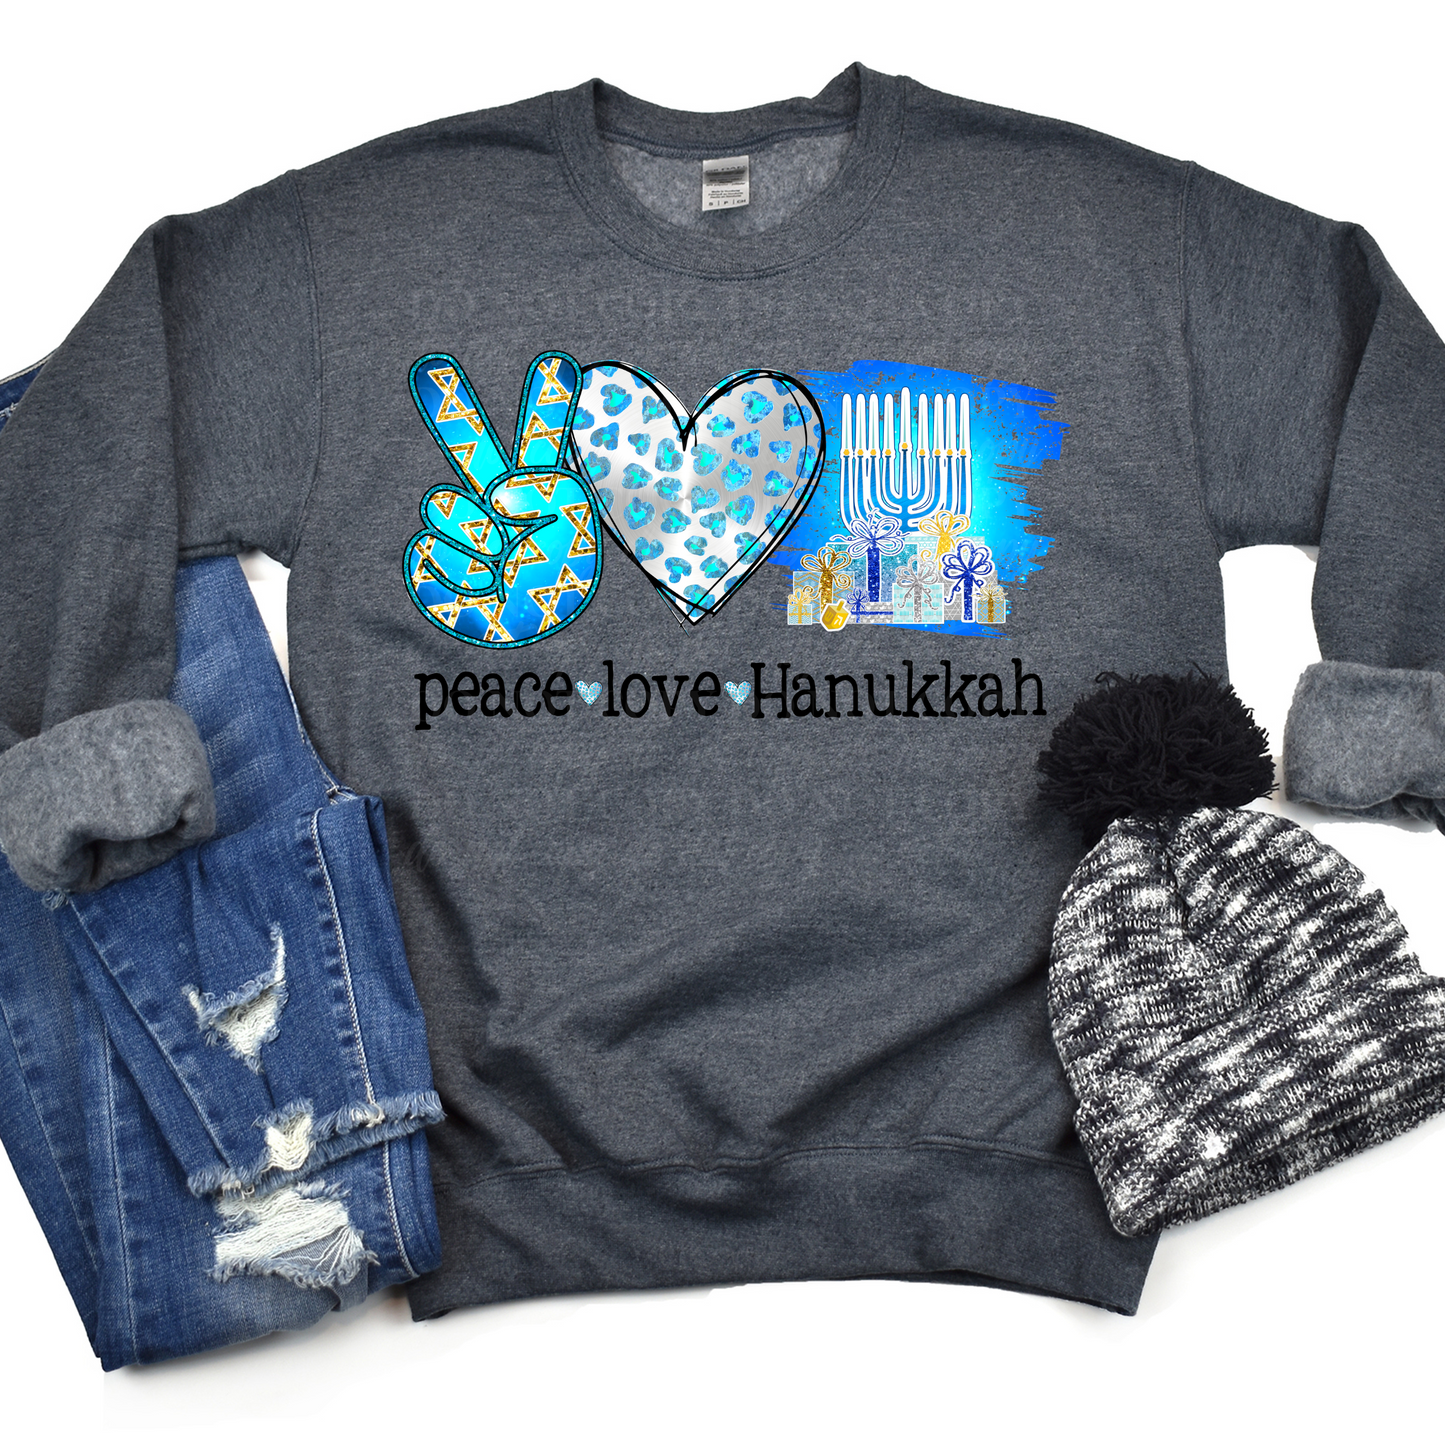 Pease Love Hanukkah